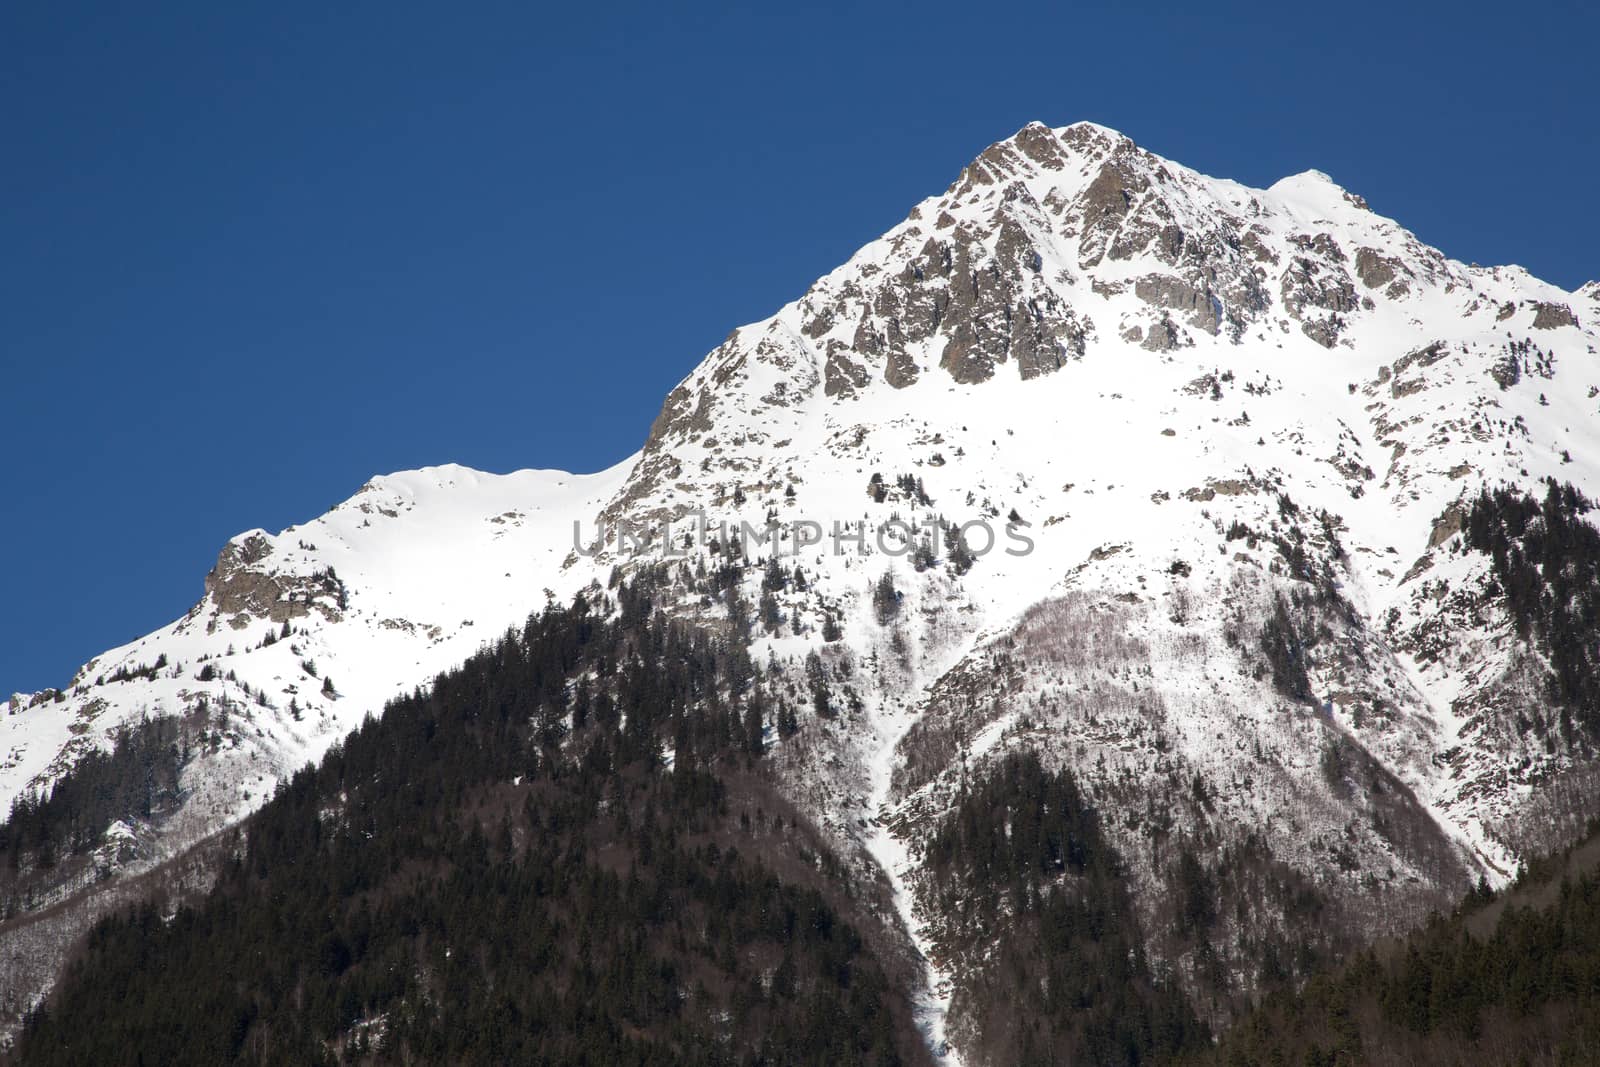 Mountain around the Oz en Oisans Station in the French Alps